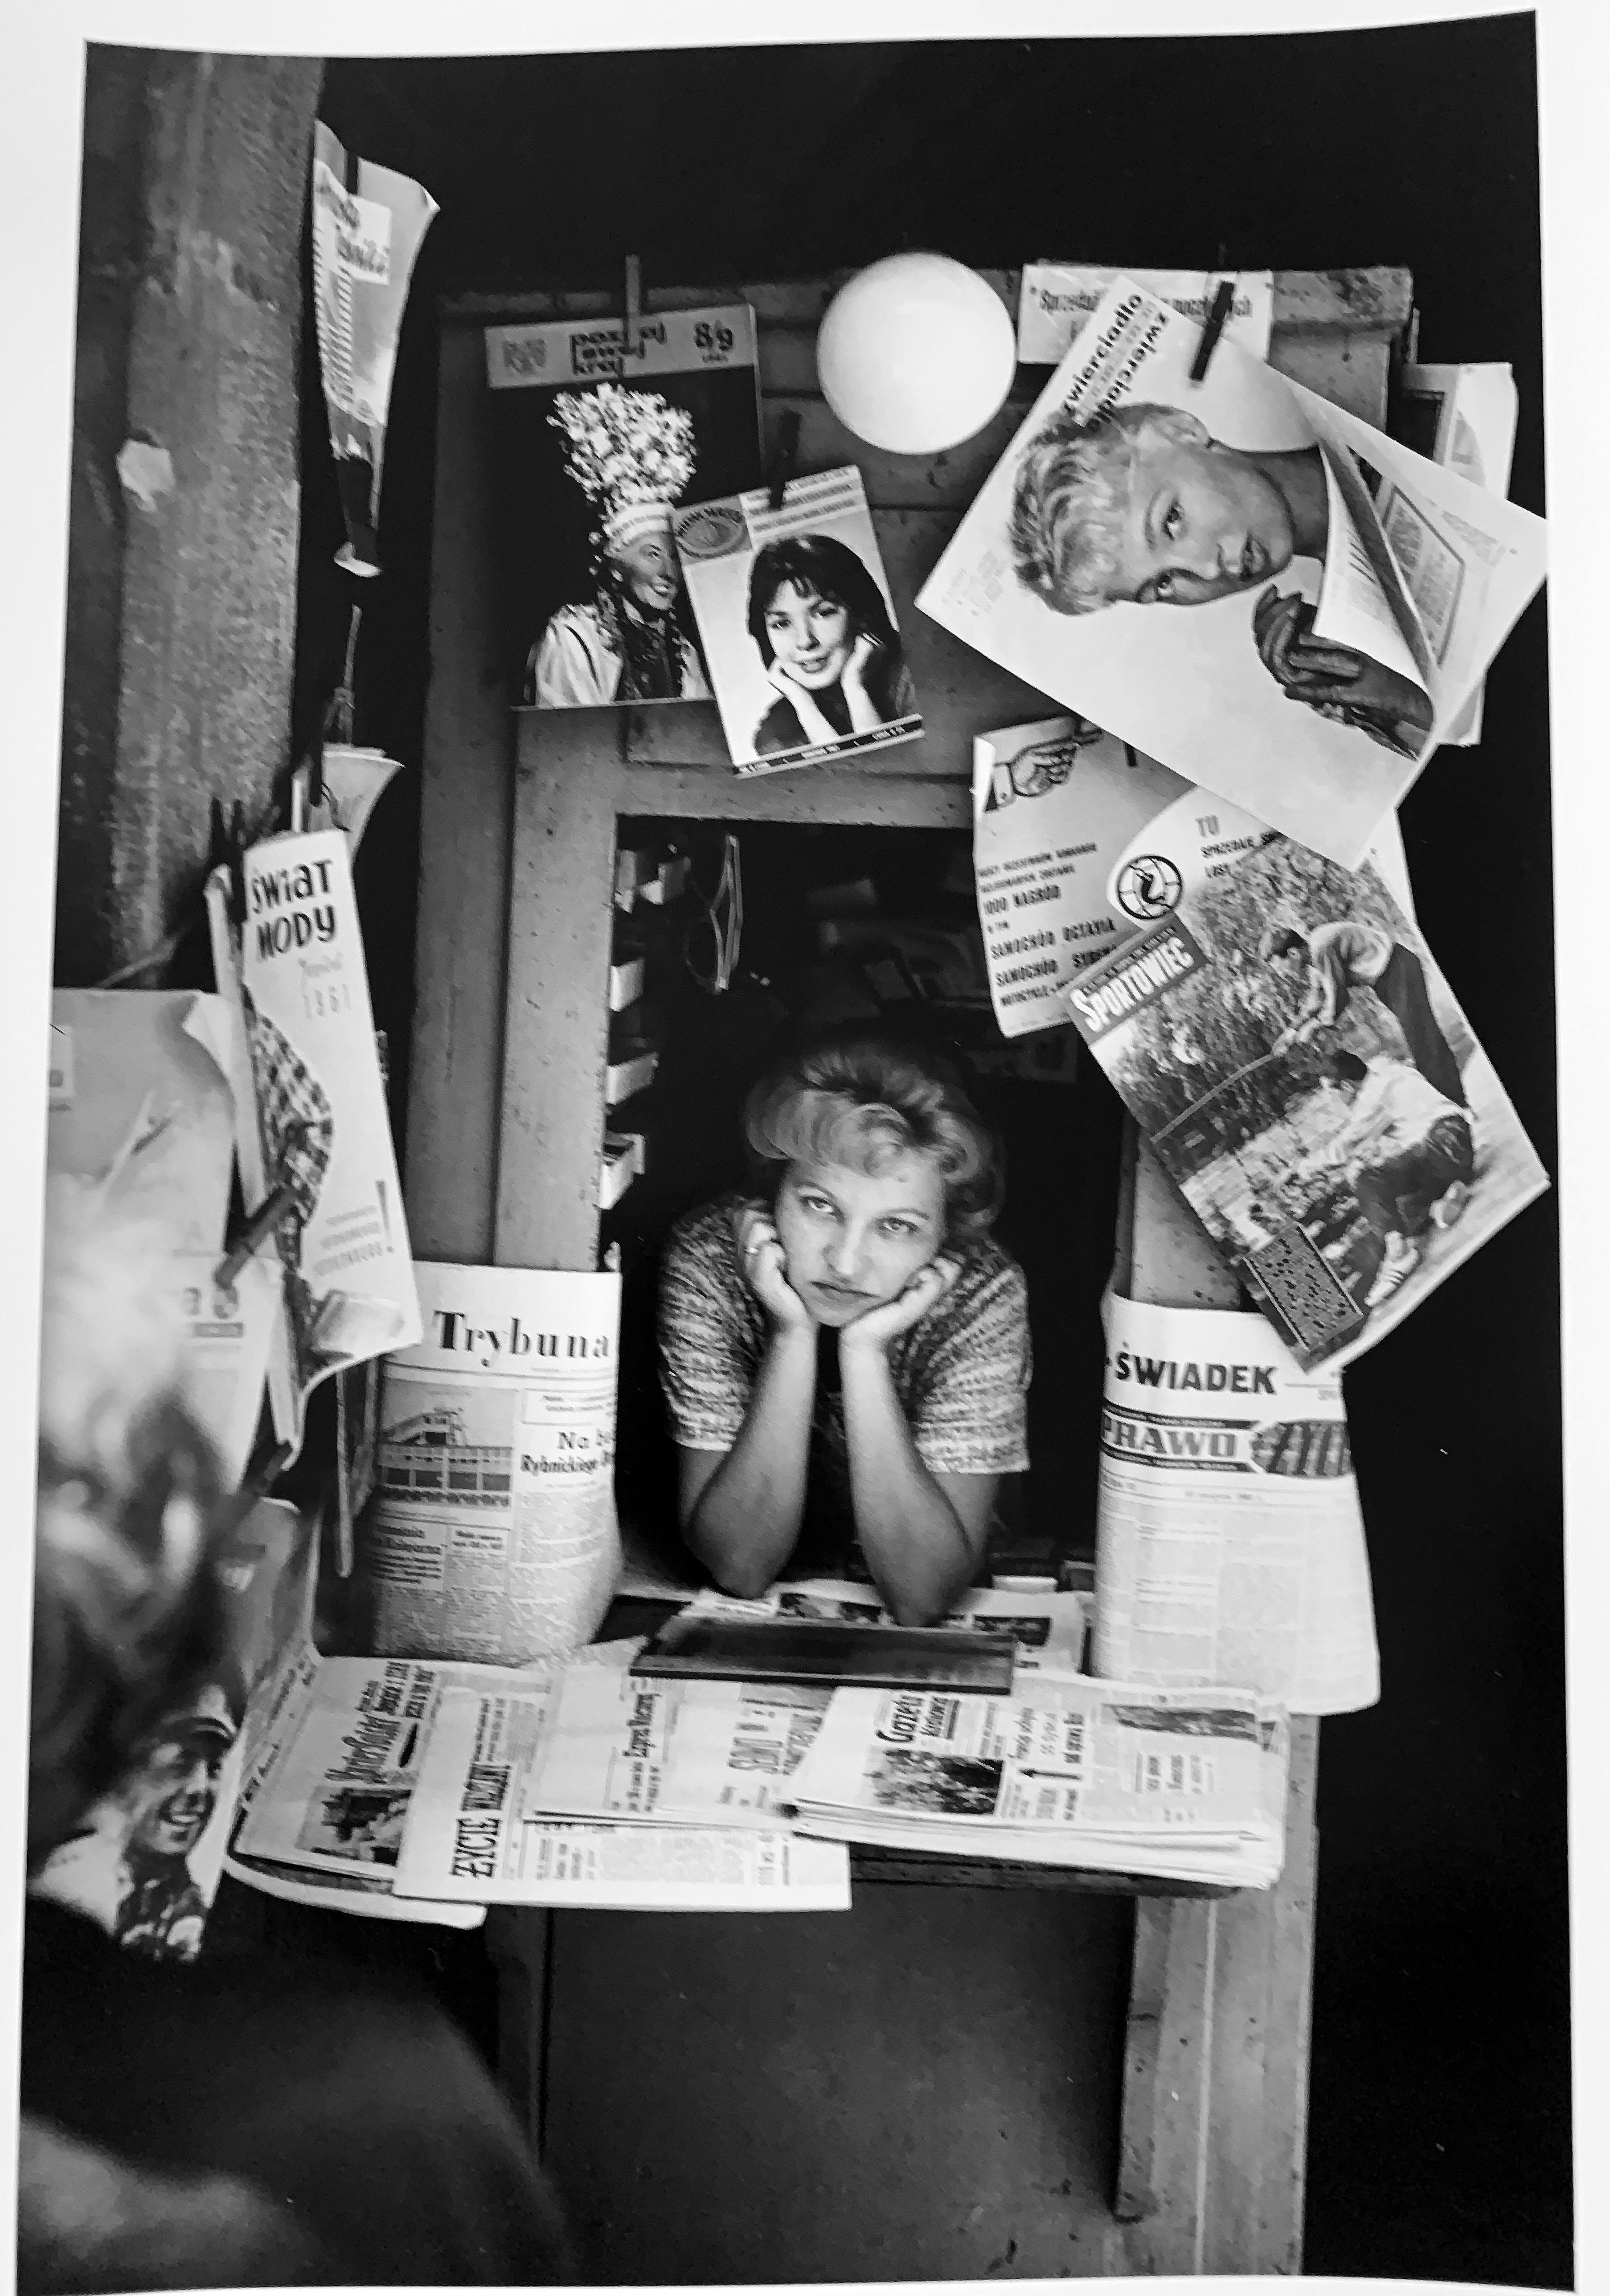 Polish Kiosk Woman, Poland, Black and White Portrait Photography 1960s